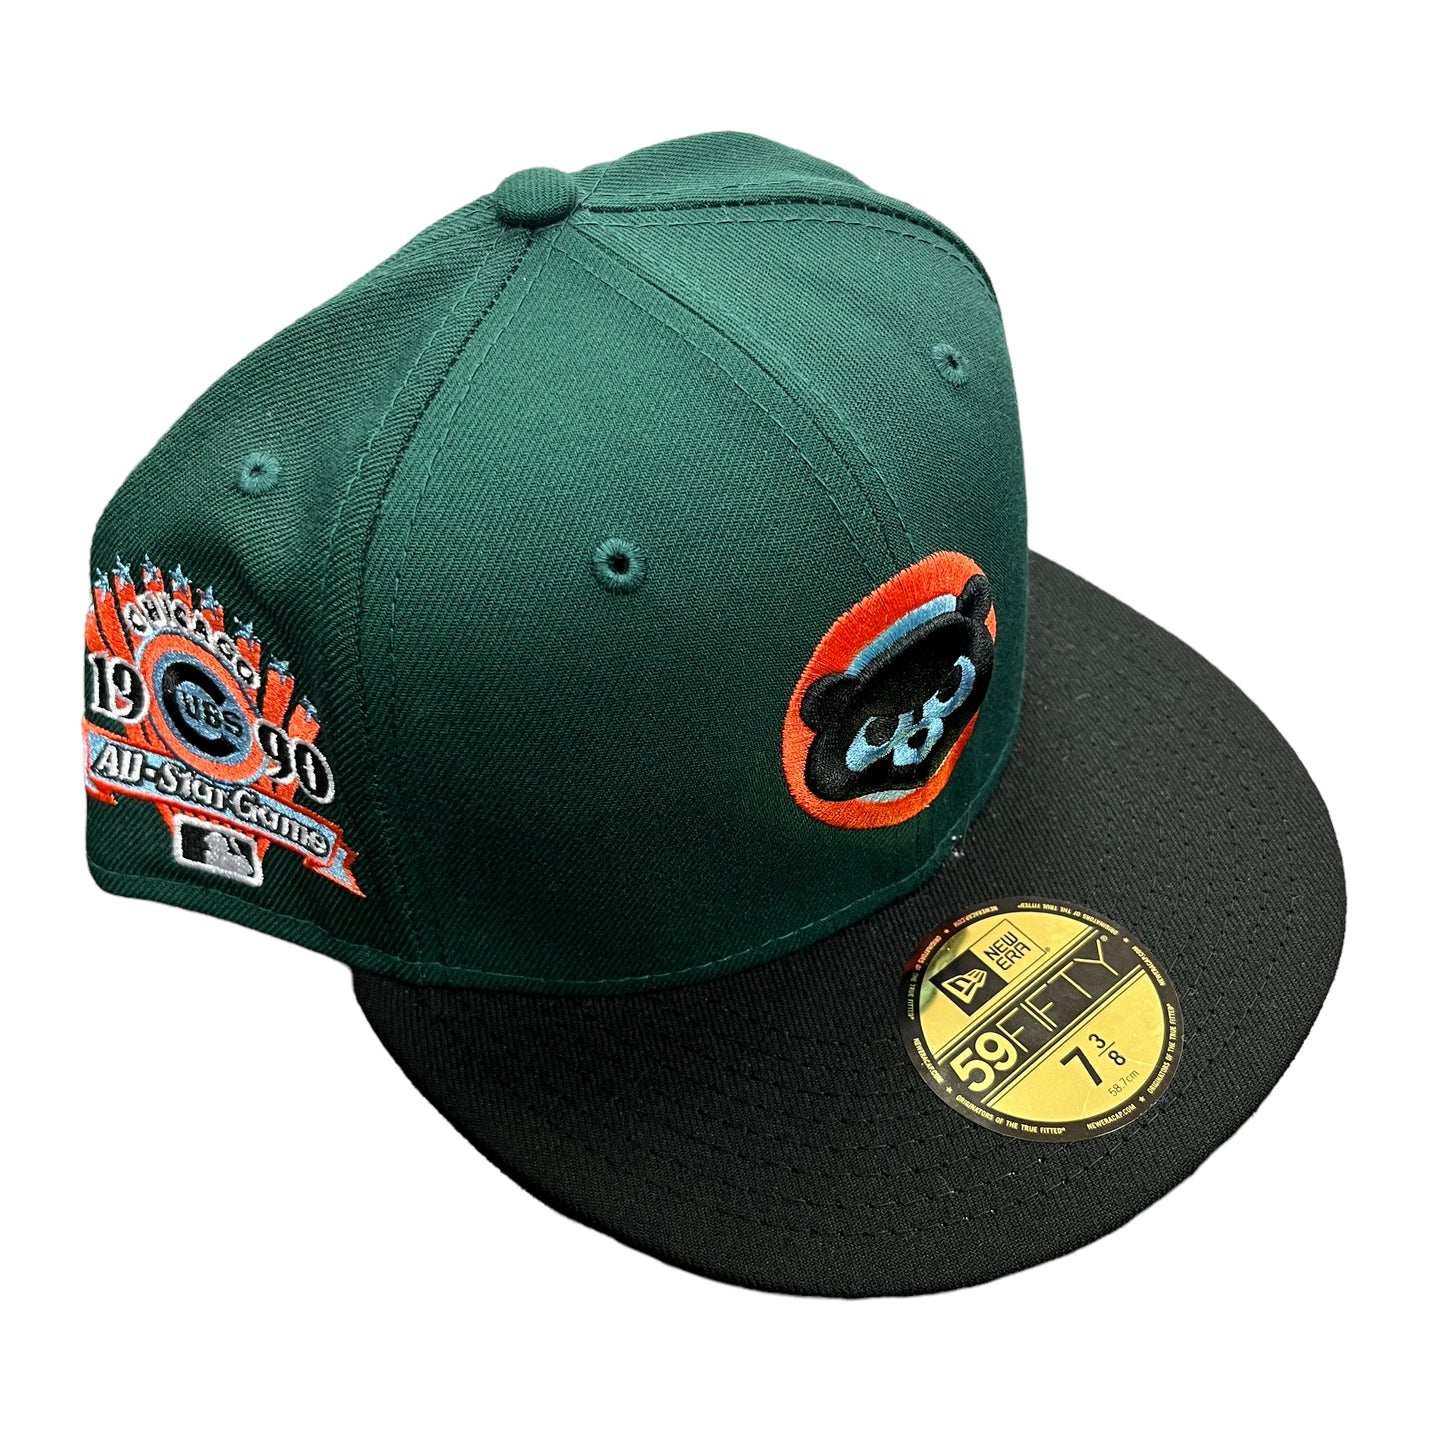 Cubs Green/Black Hat